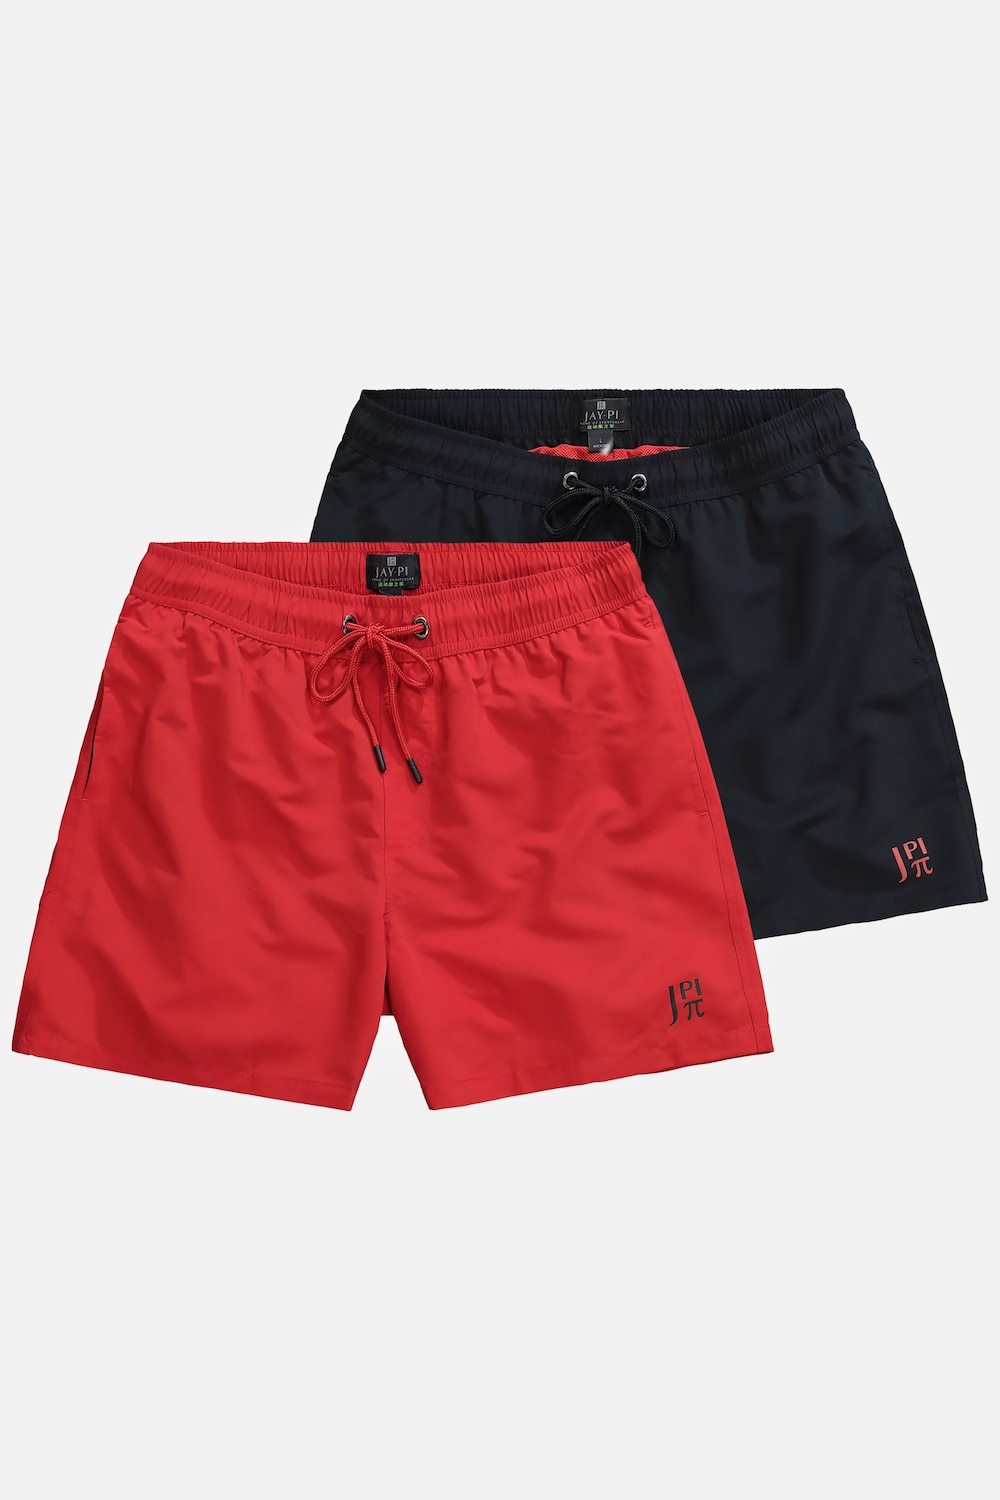 grandes tailles shorts de bain jay-pi avec taille élastique, femmes, rouge, taille: 7xl, polyester, jay-pi